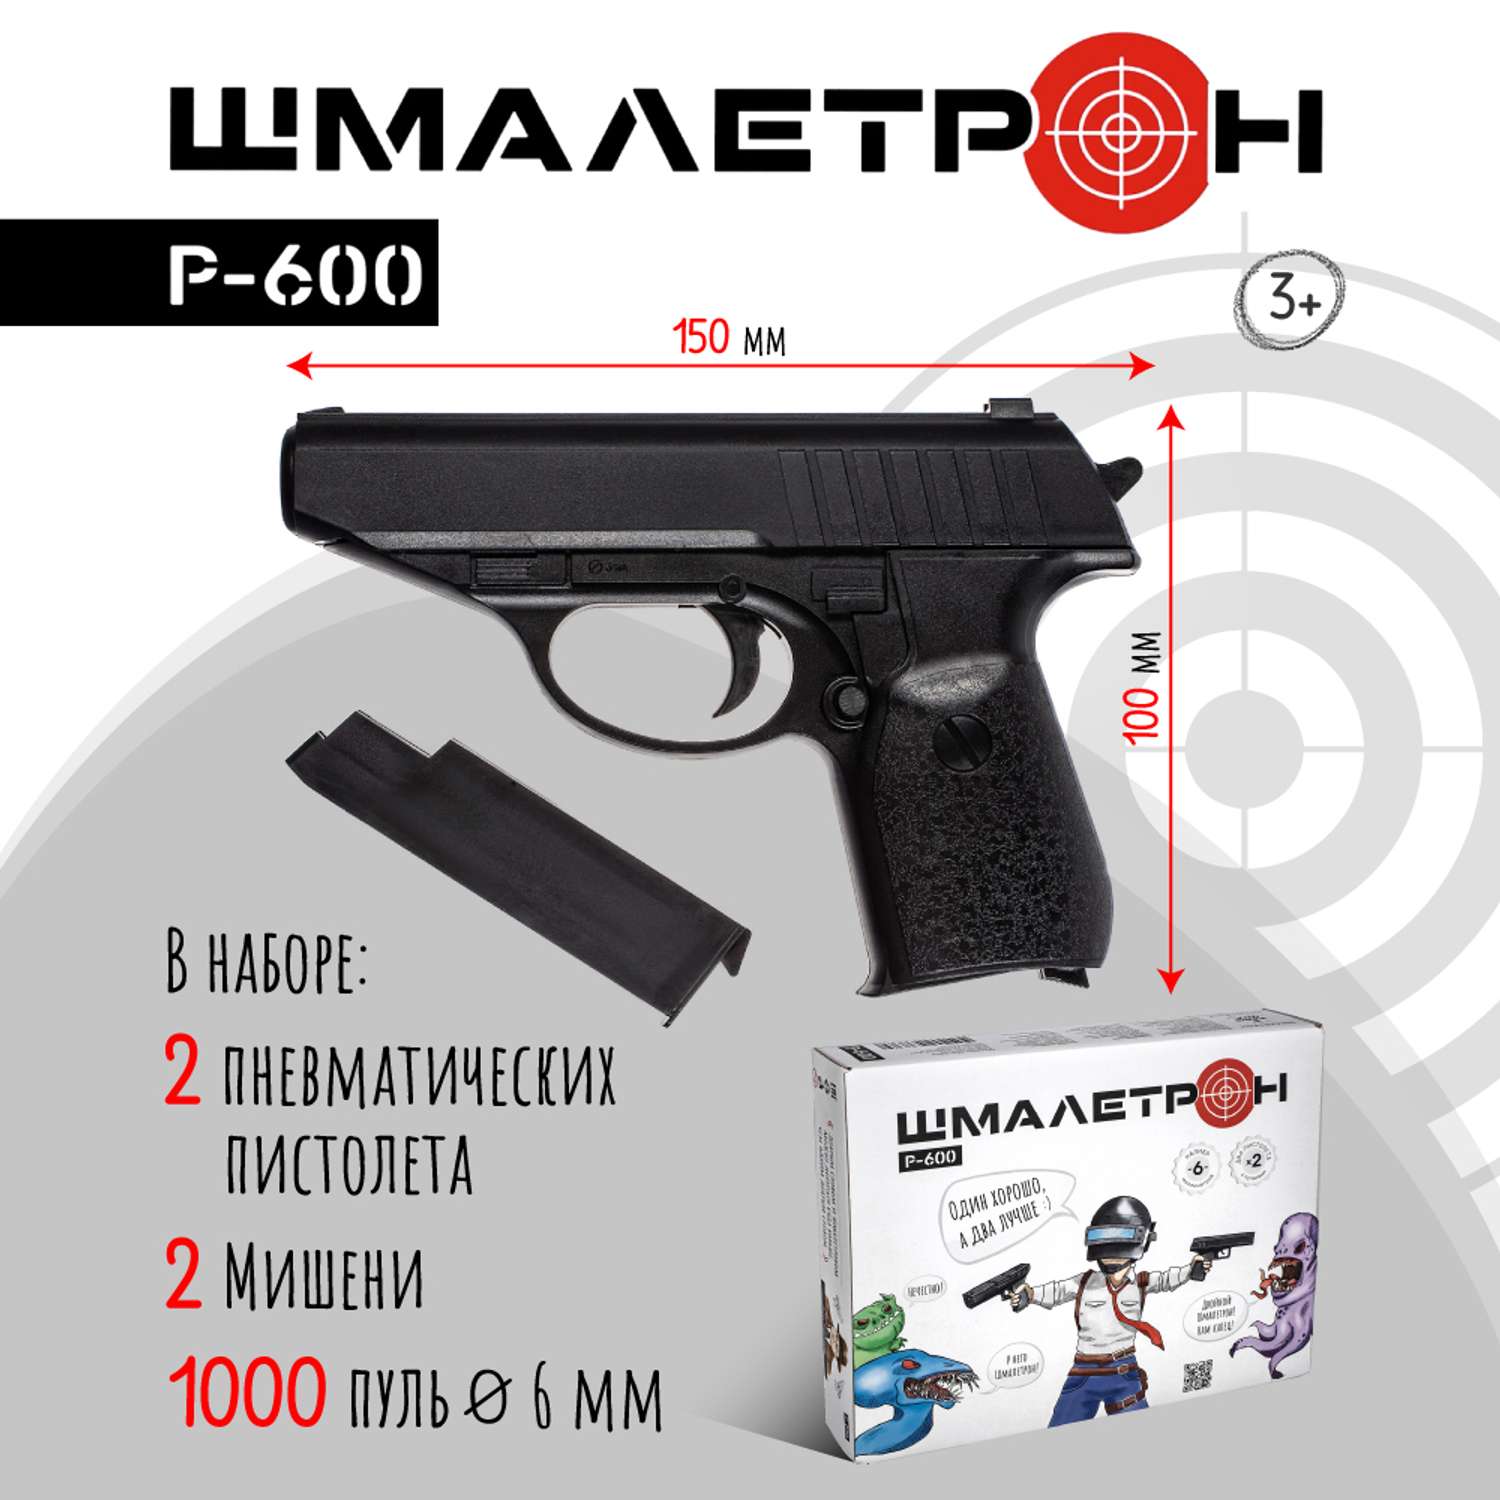 Игрушечное оружие Шмалетрон ДВА пистолета Макарова с 1000 пулек - фото 2